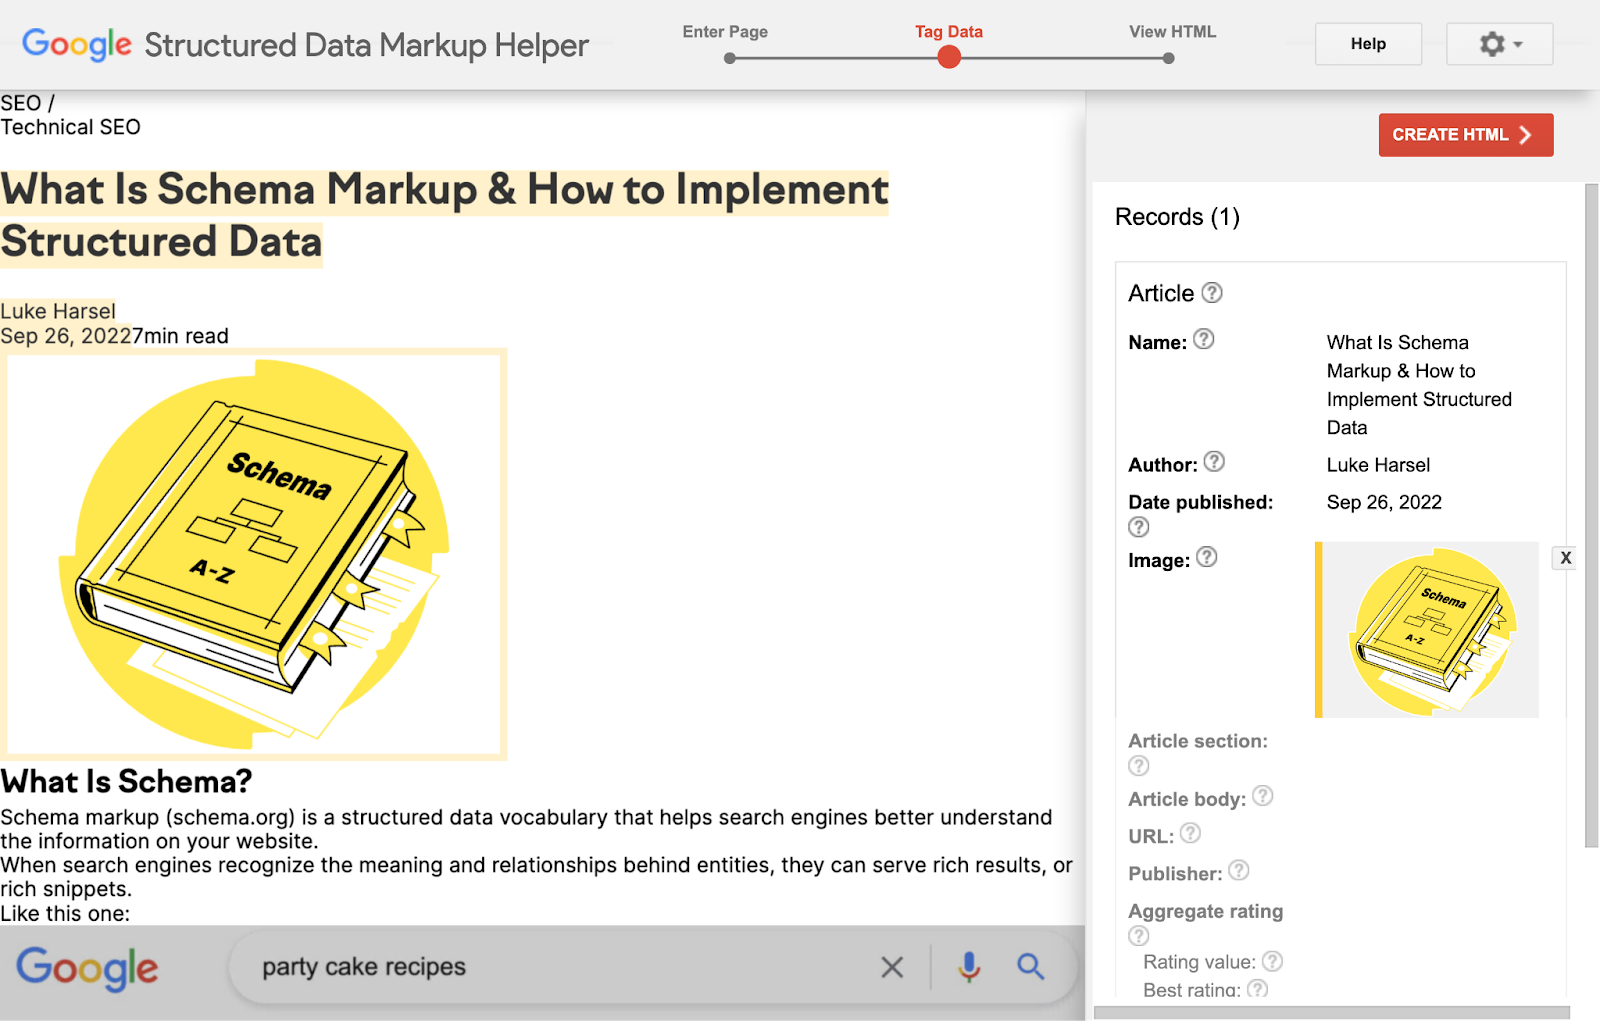 how to generate schema in Structured Data Markup Helper